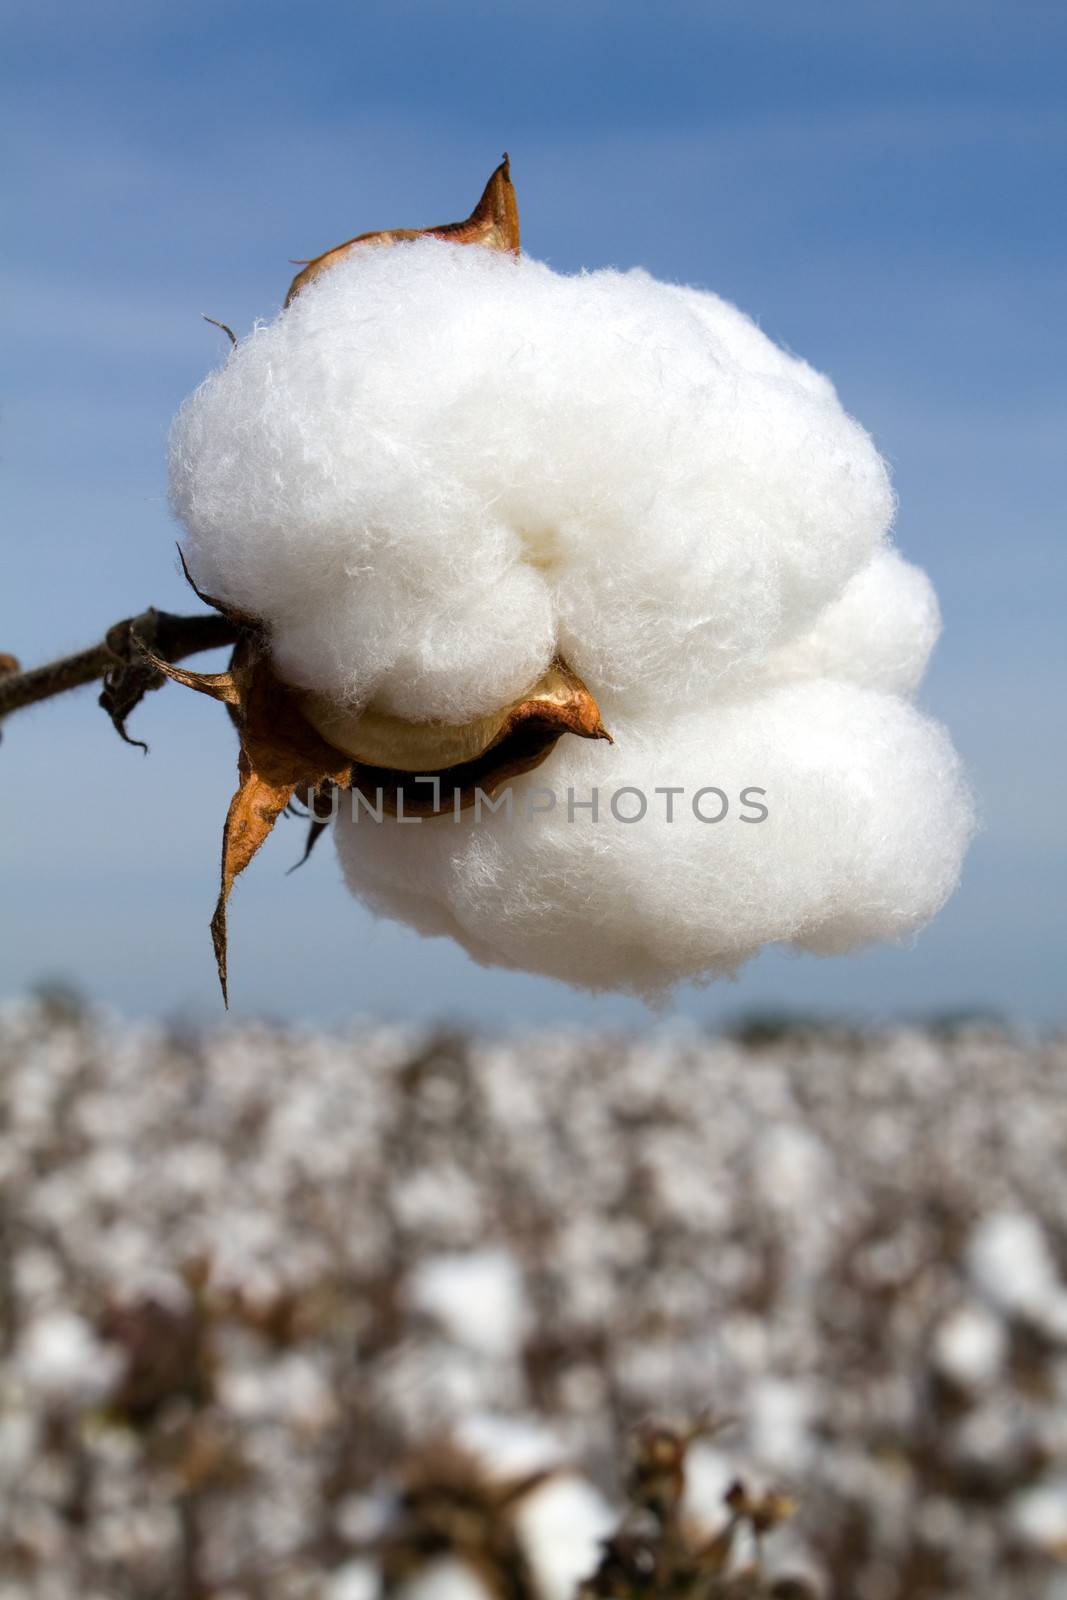 Harvest Ready Cotton Boll by sframe